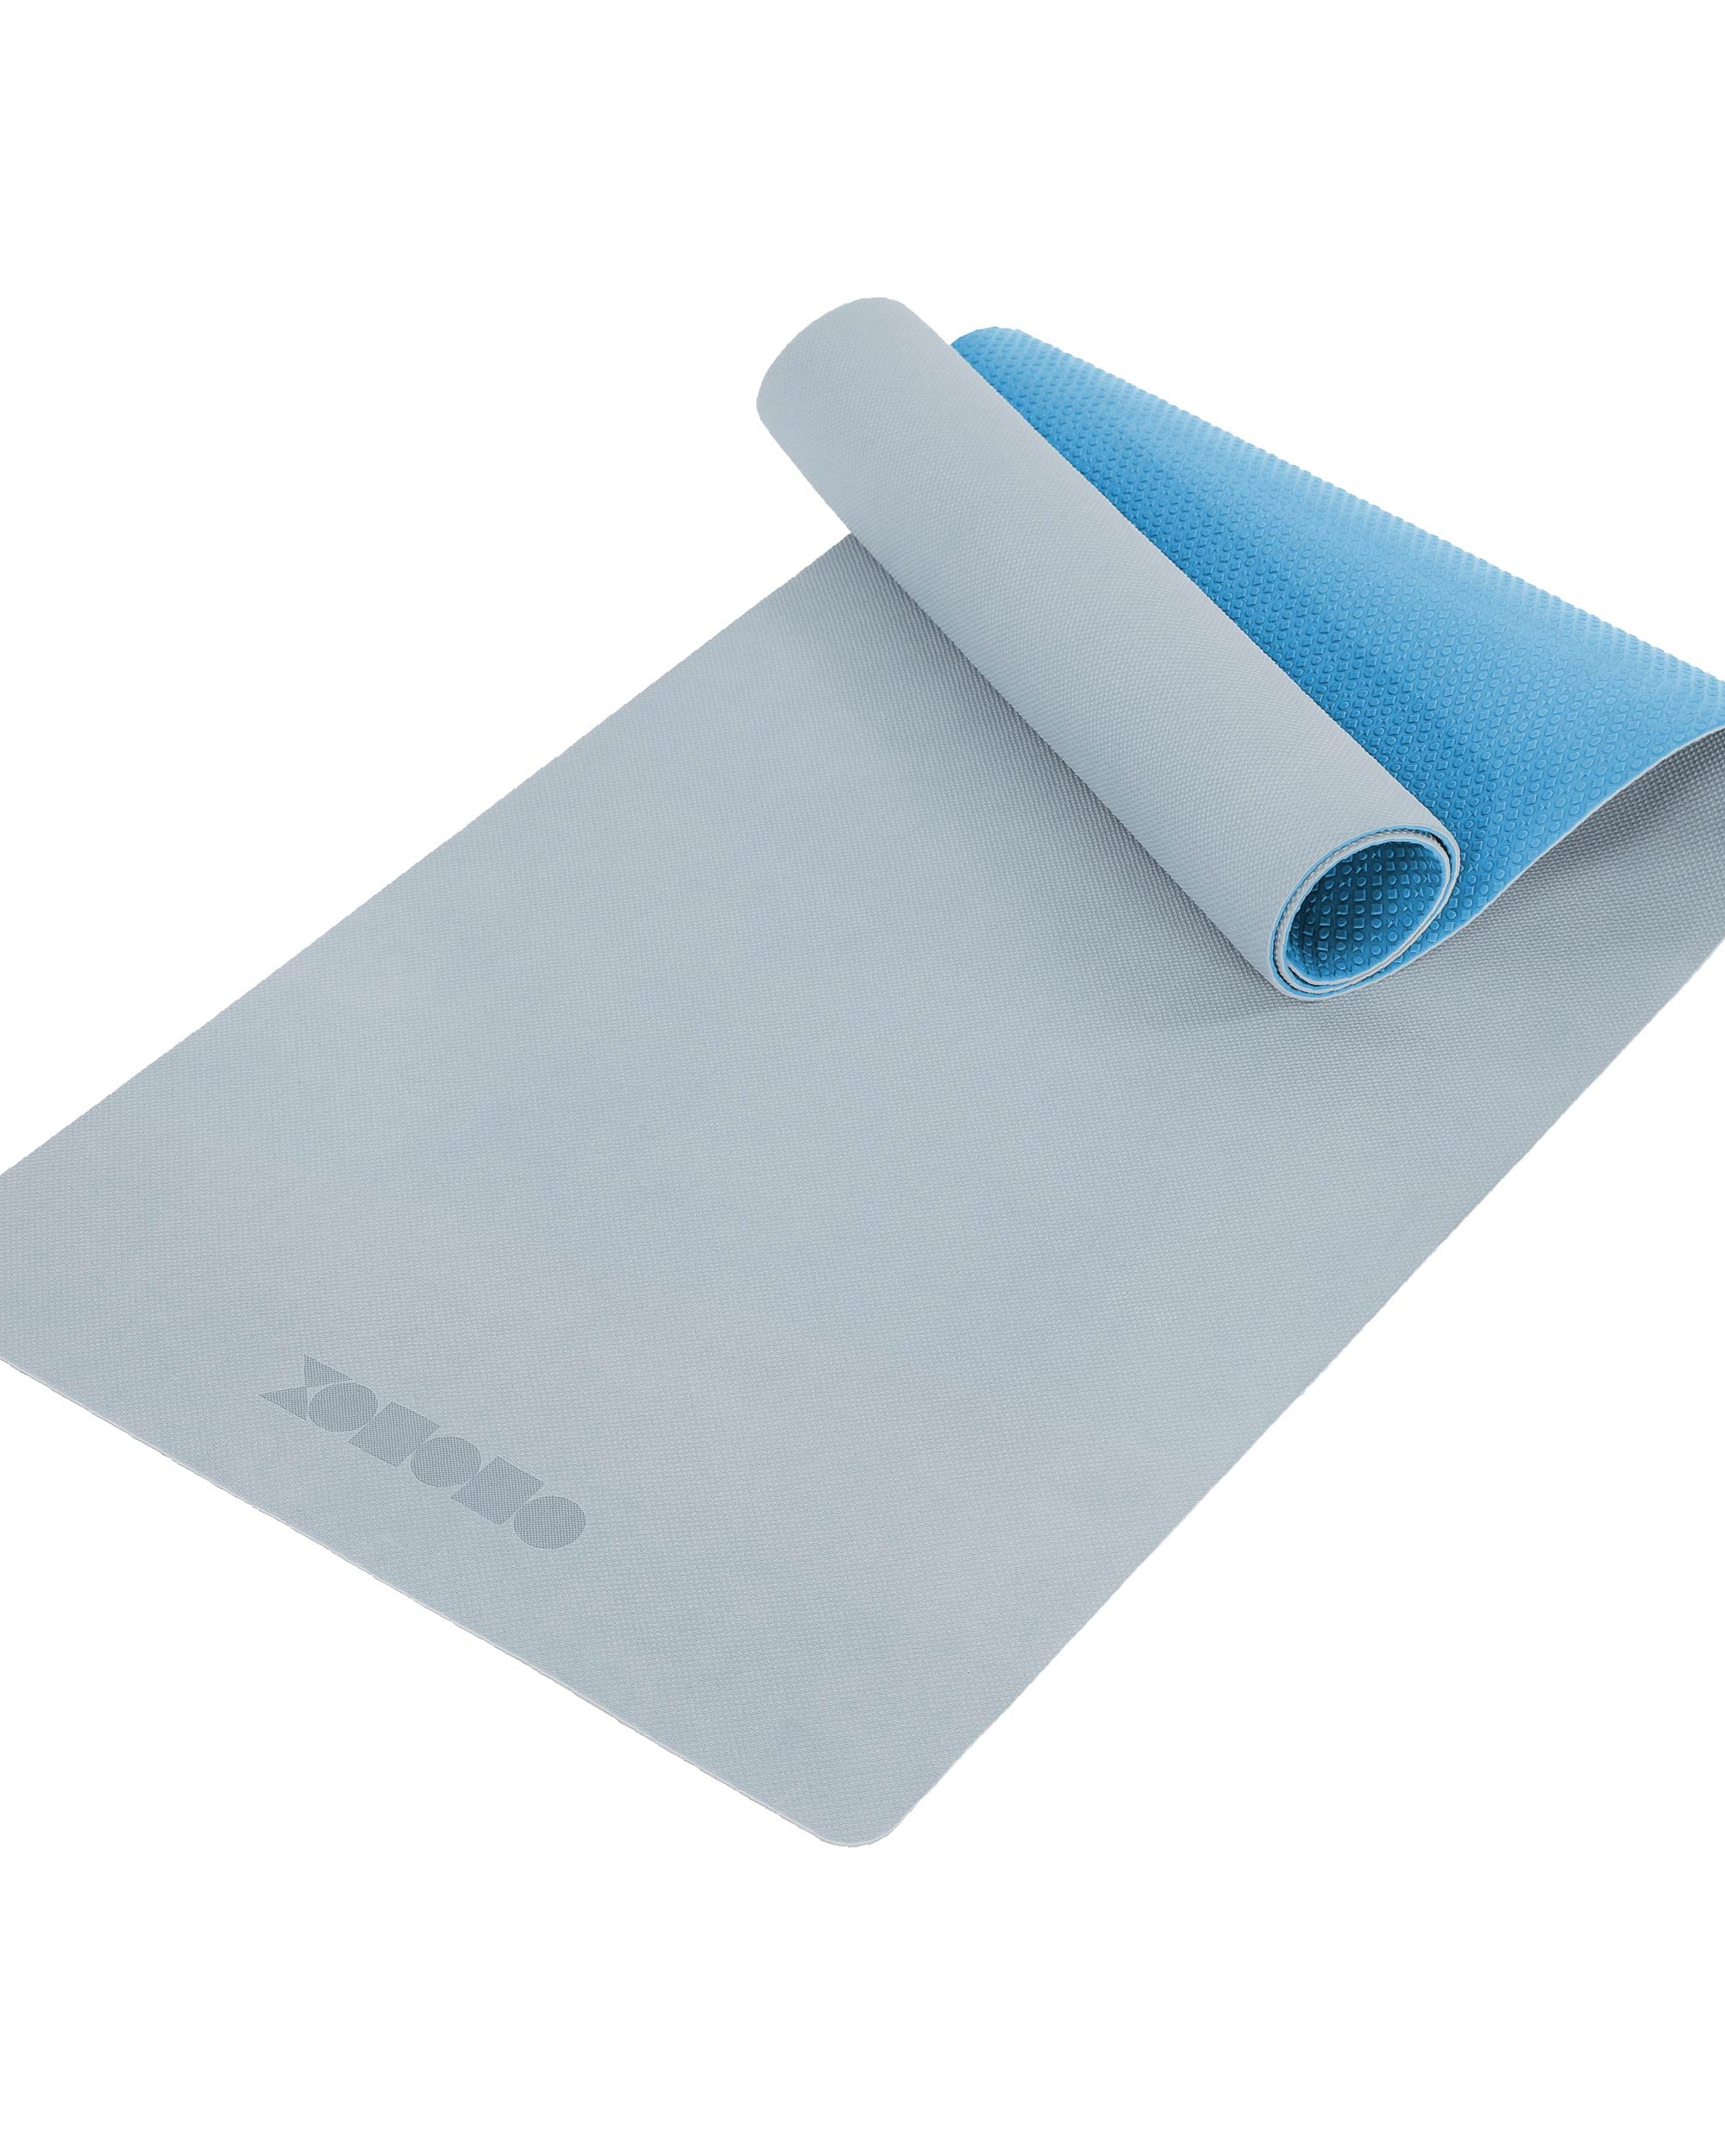 Eco-friendly TPE non-slip sports fitness yoga mat Gray/Blue - ododos